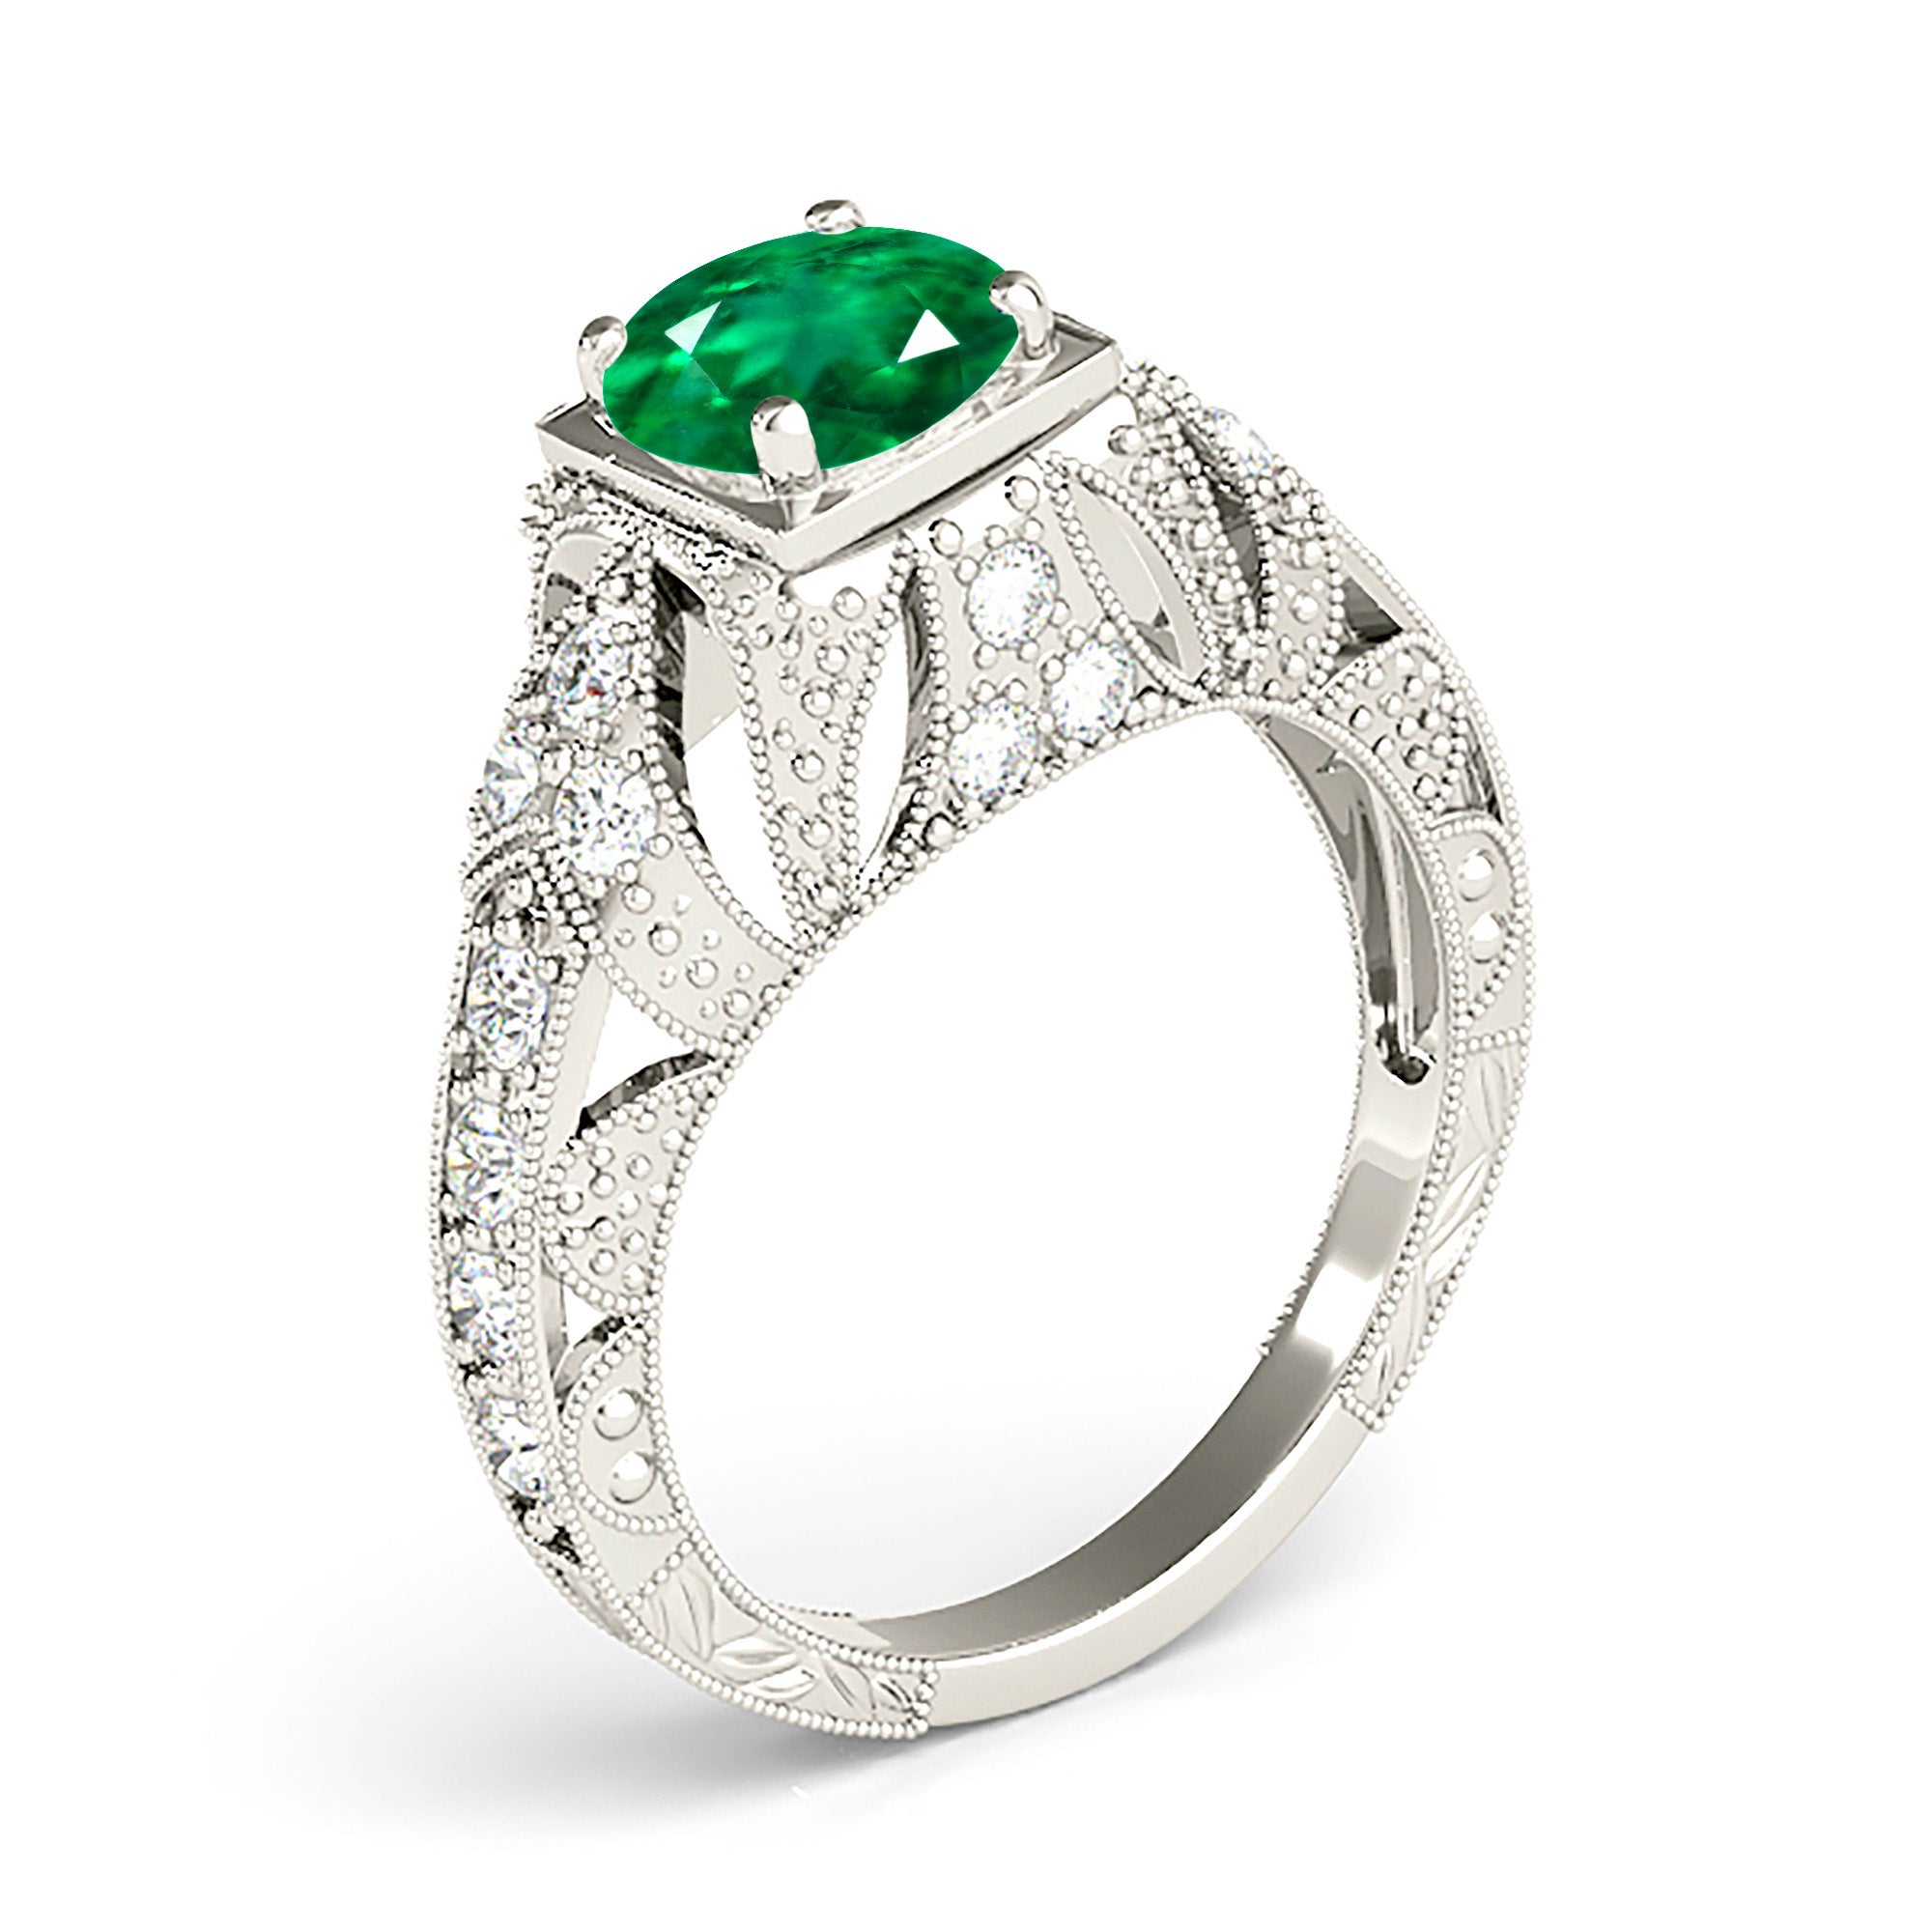 1.14 ct. Genuine Solitaire Emerald Ring With 0.20 ctw. Fancy Diamond Filigree And Milgrain Band-in 14K/18K White, Yellow, Rose Gold and Platinum - Christmas Jewelry Gift -VIRABYANI